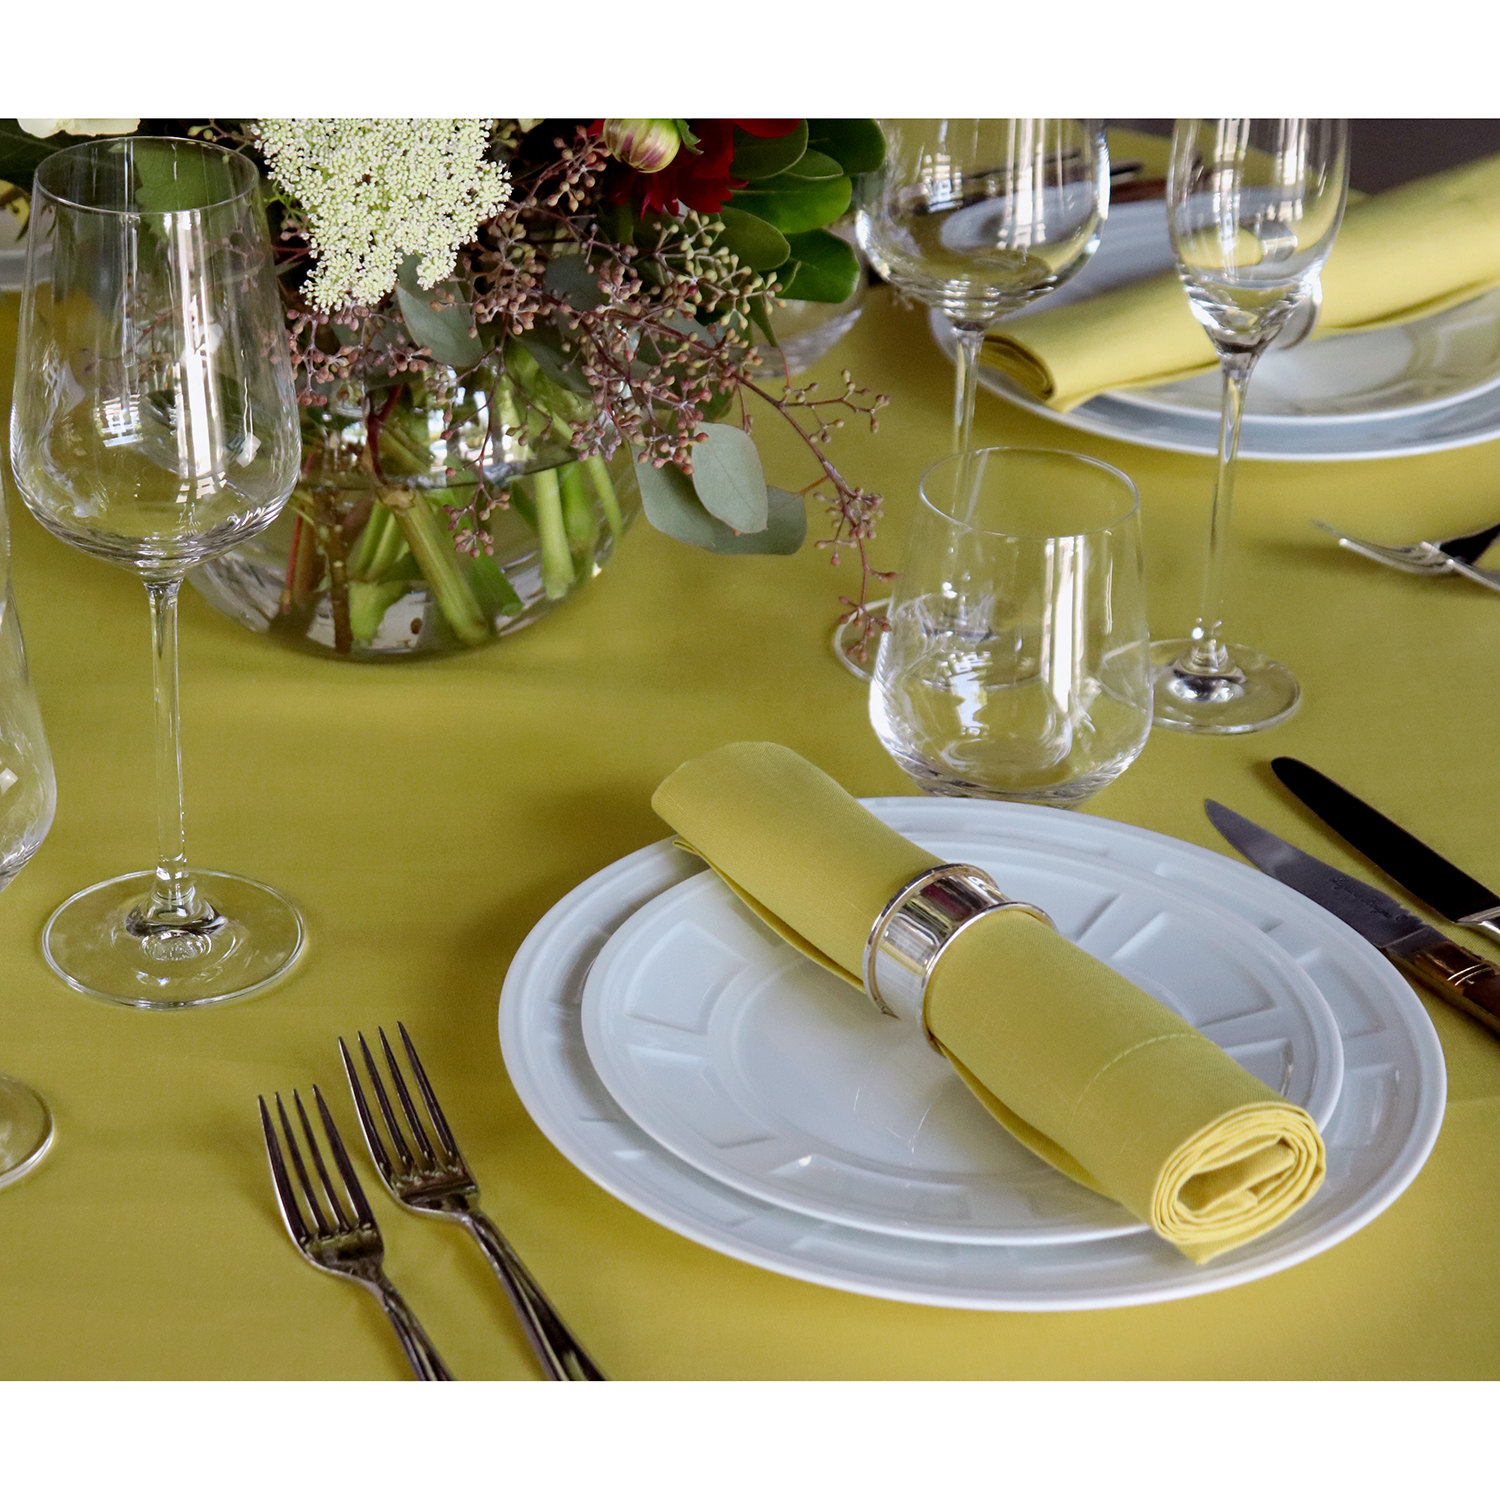 Citron Yellow Oval Linen Tablecloth